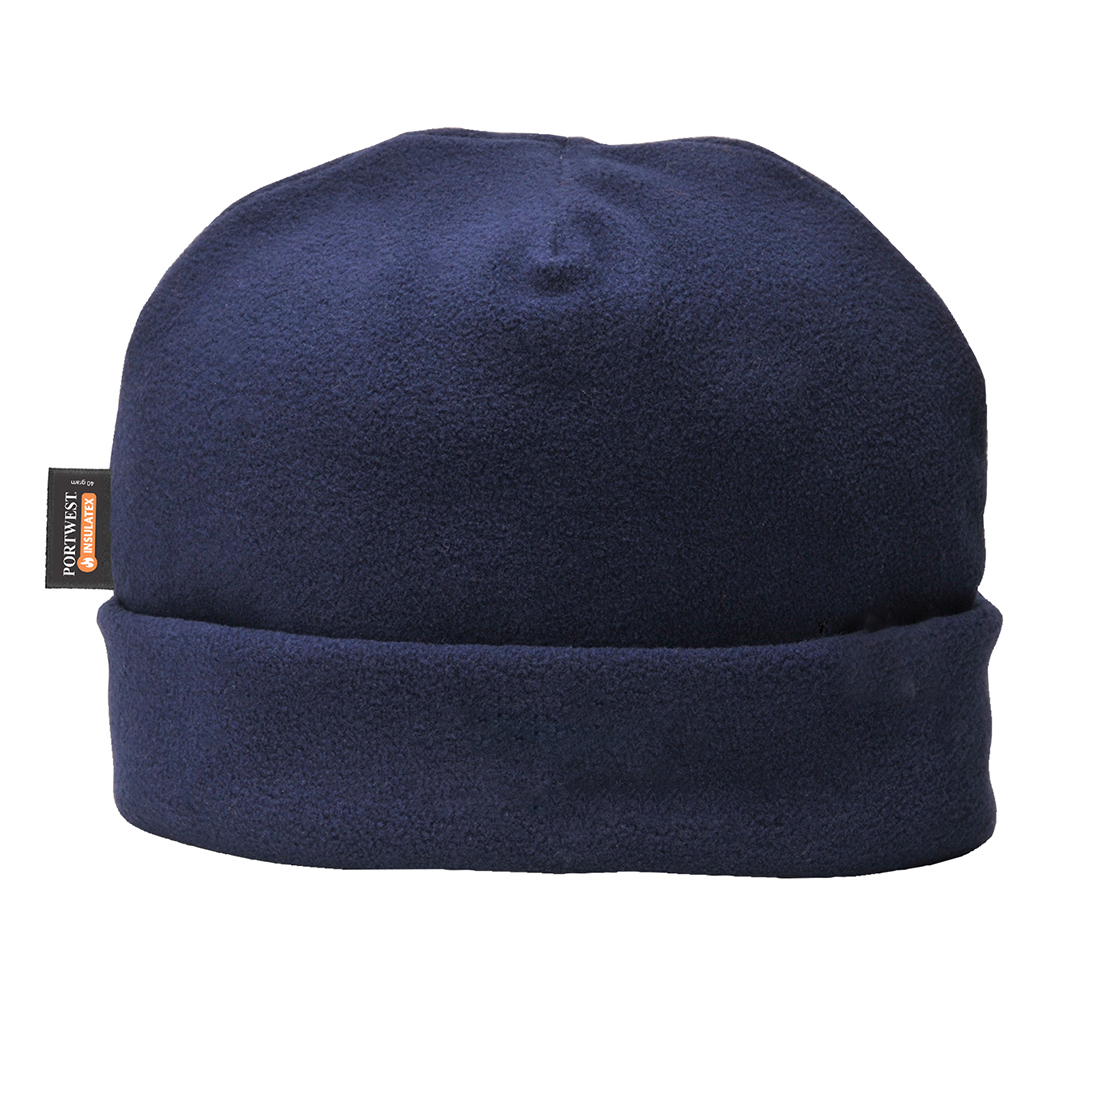 Fleece Hat Insulatex Lined Size  Navy